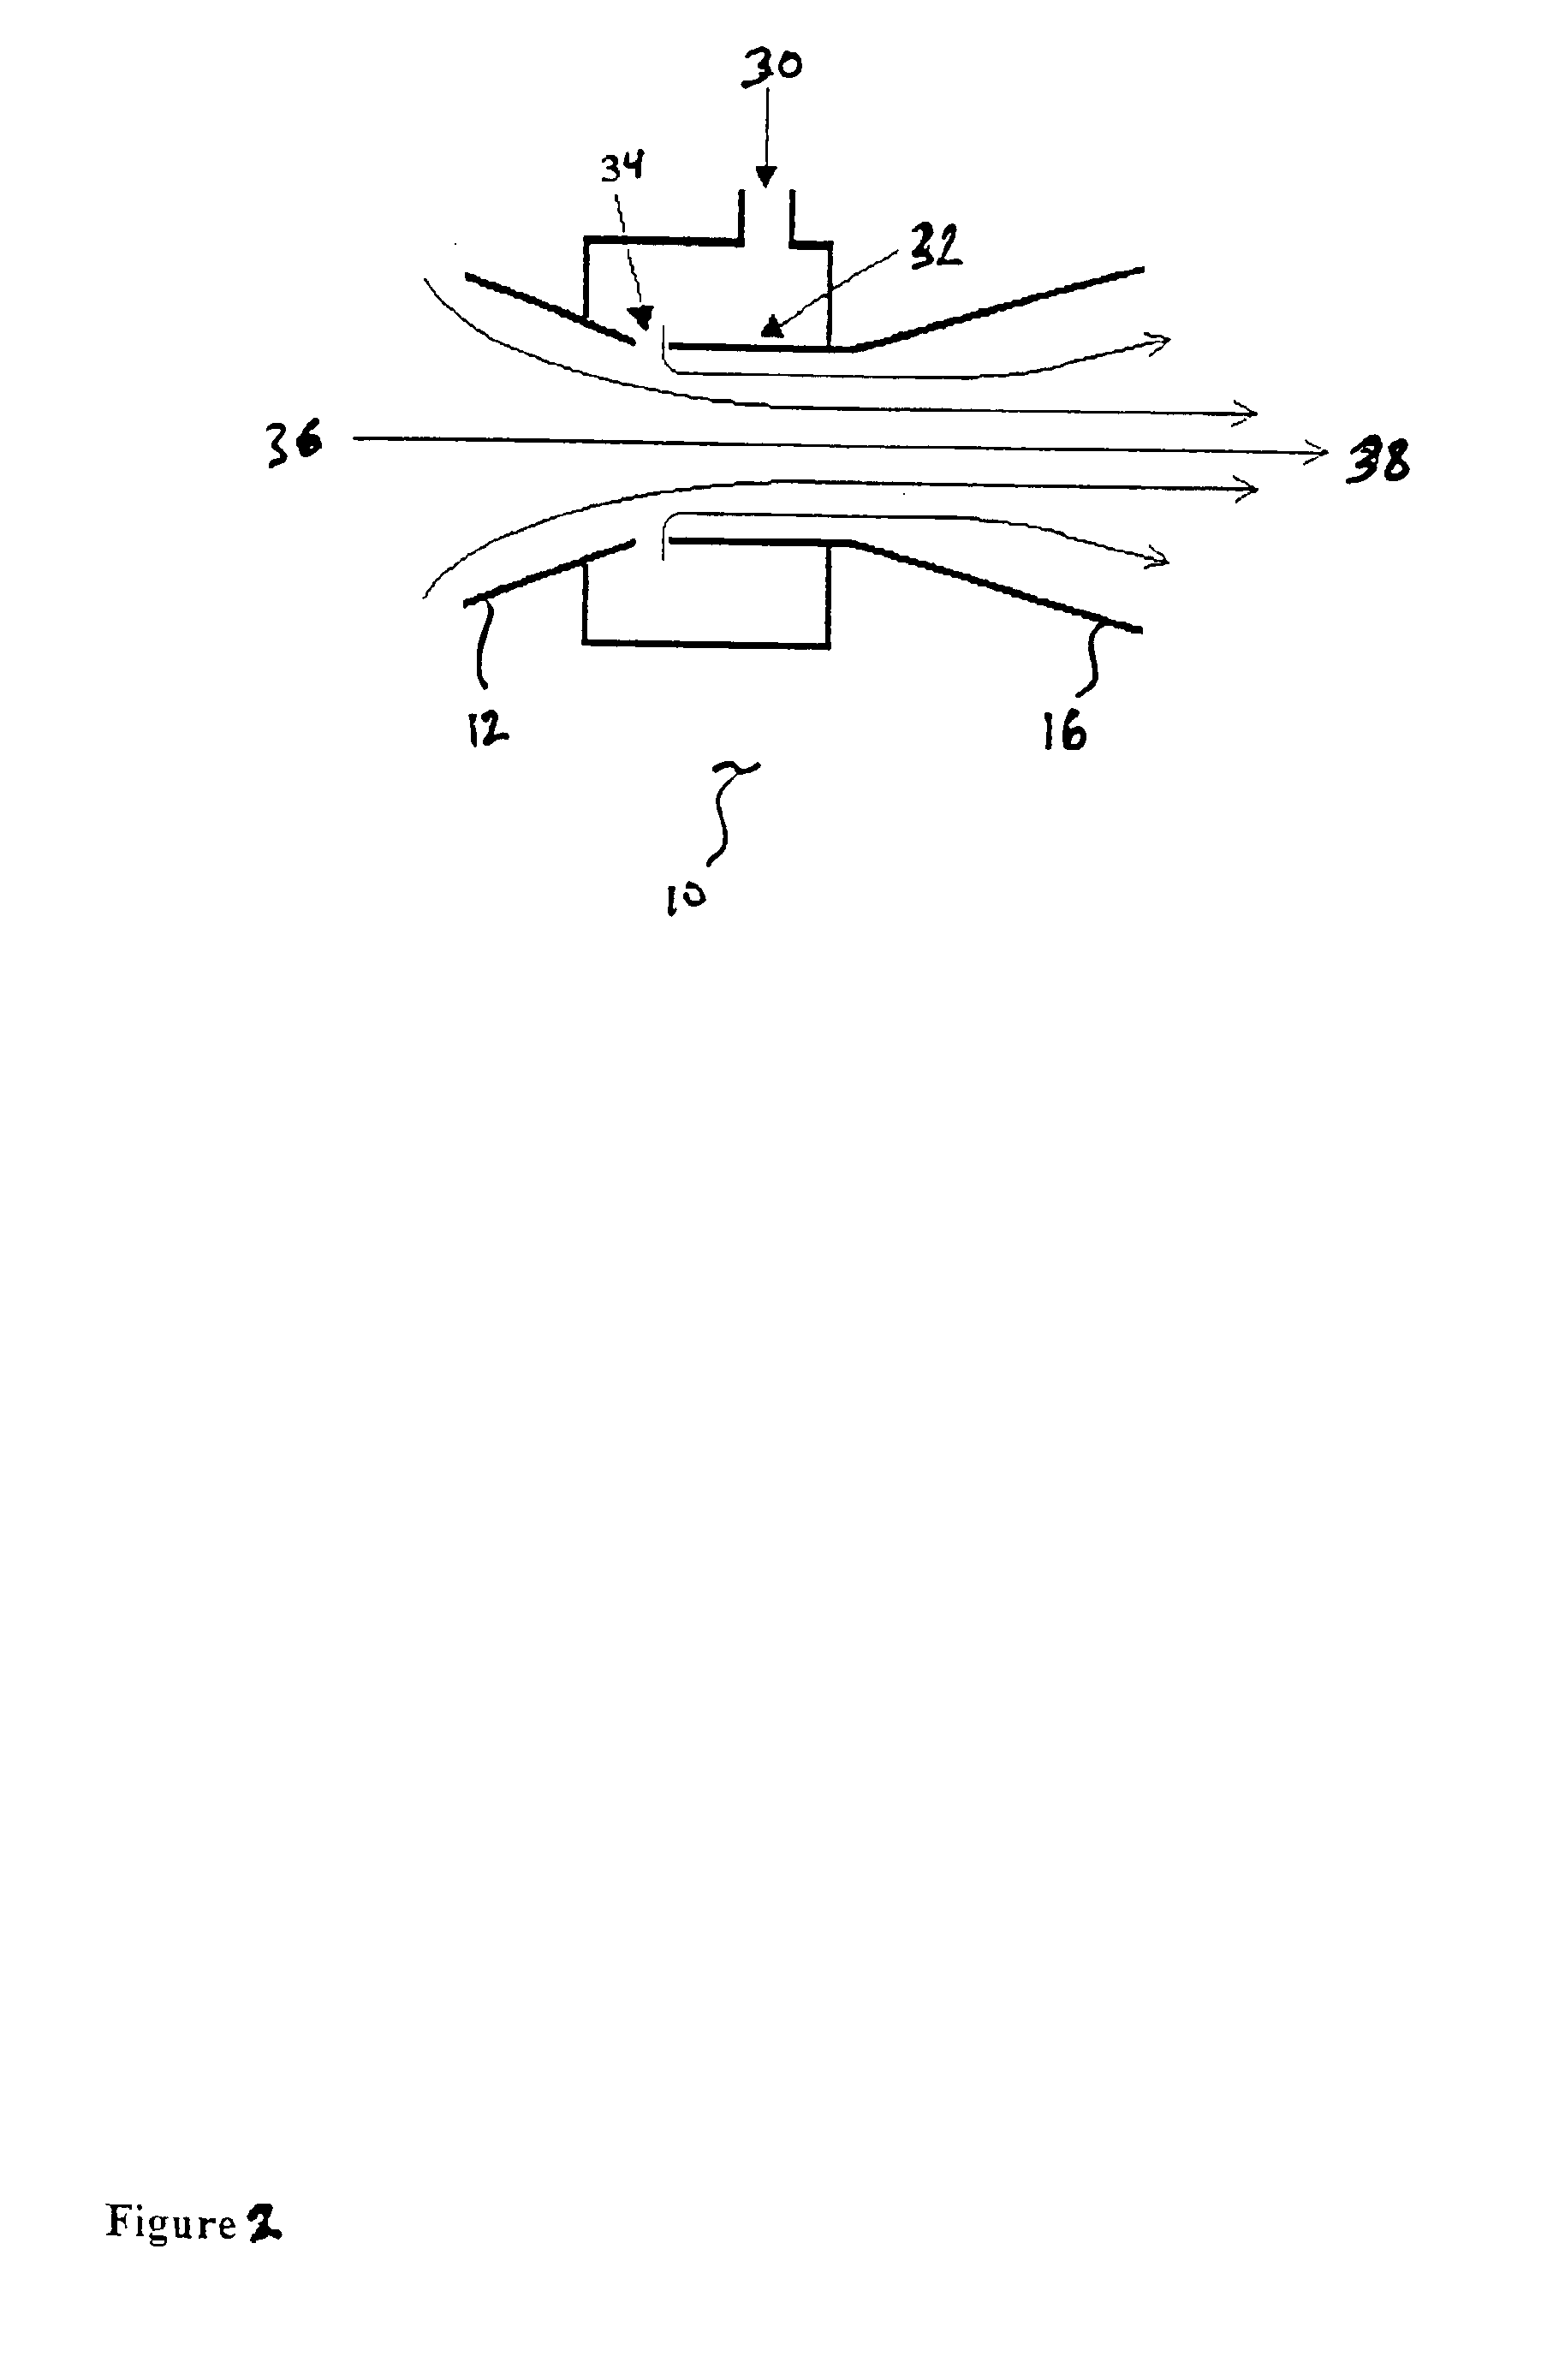 Method and apparatus for aerodynamic ion focusing